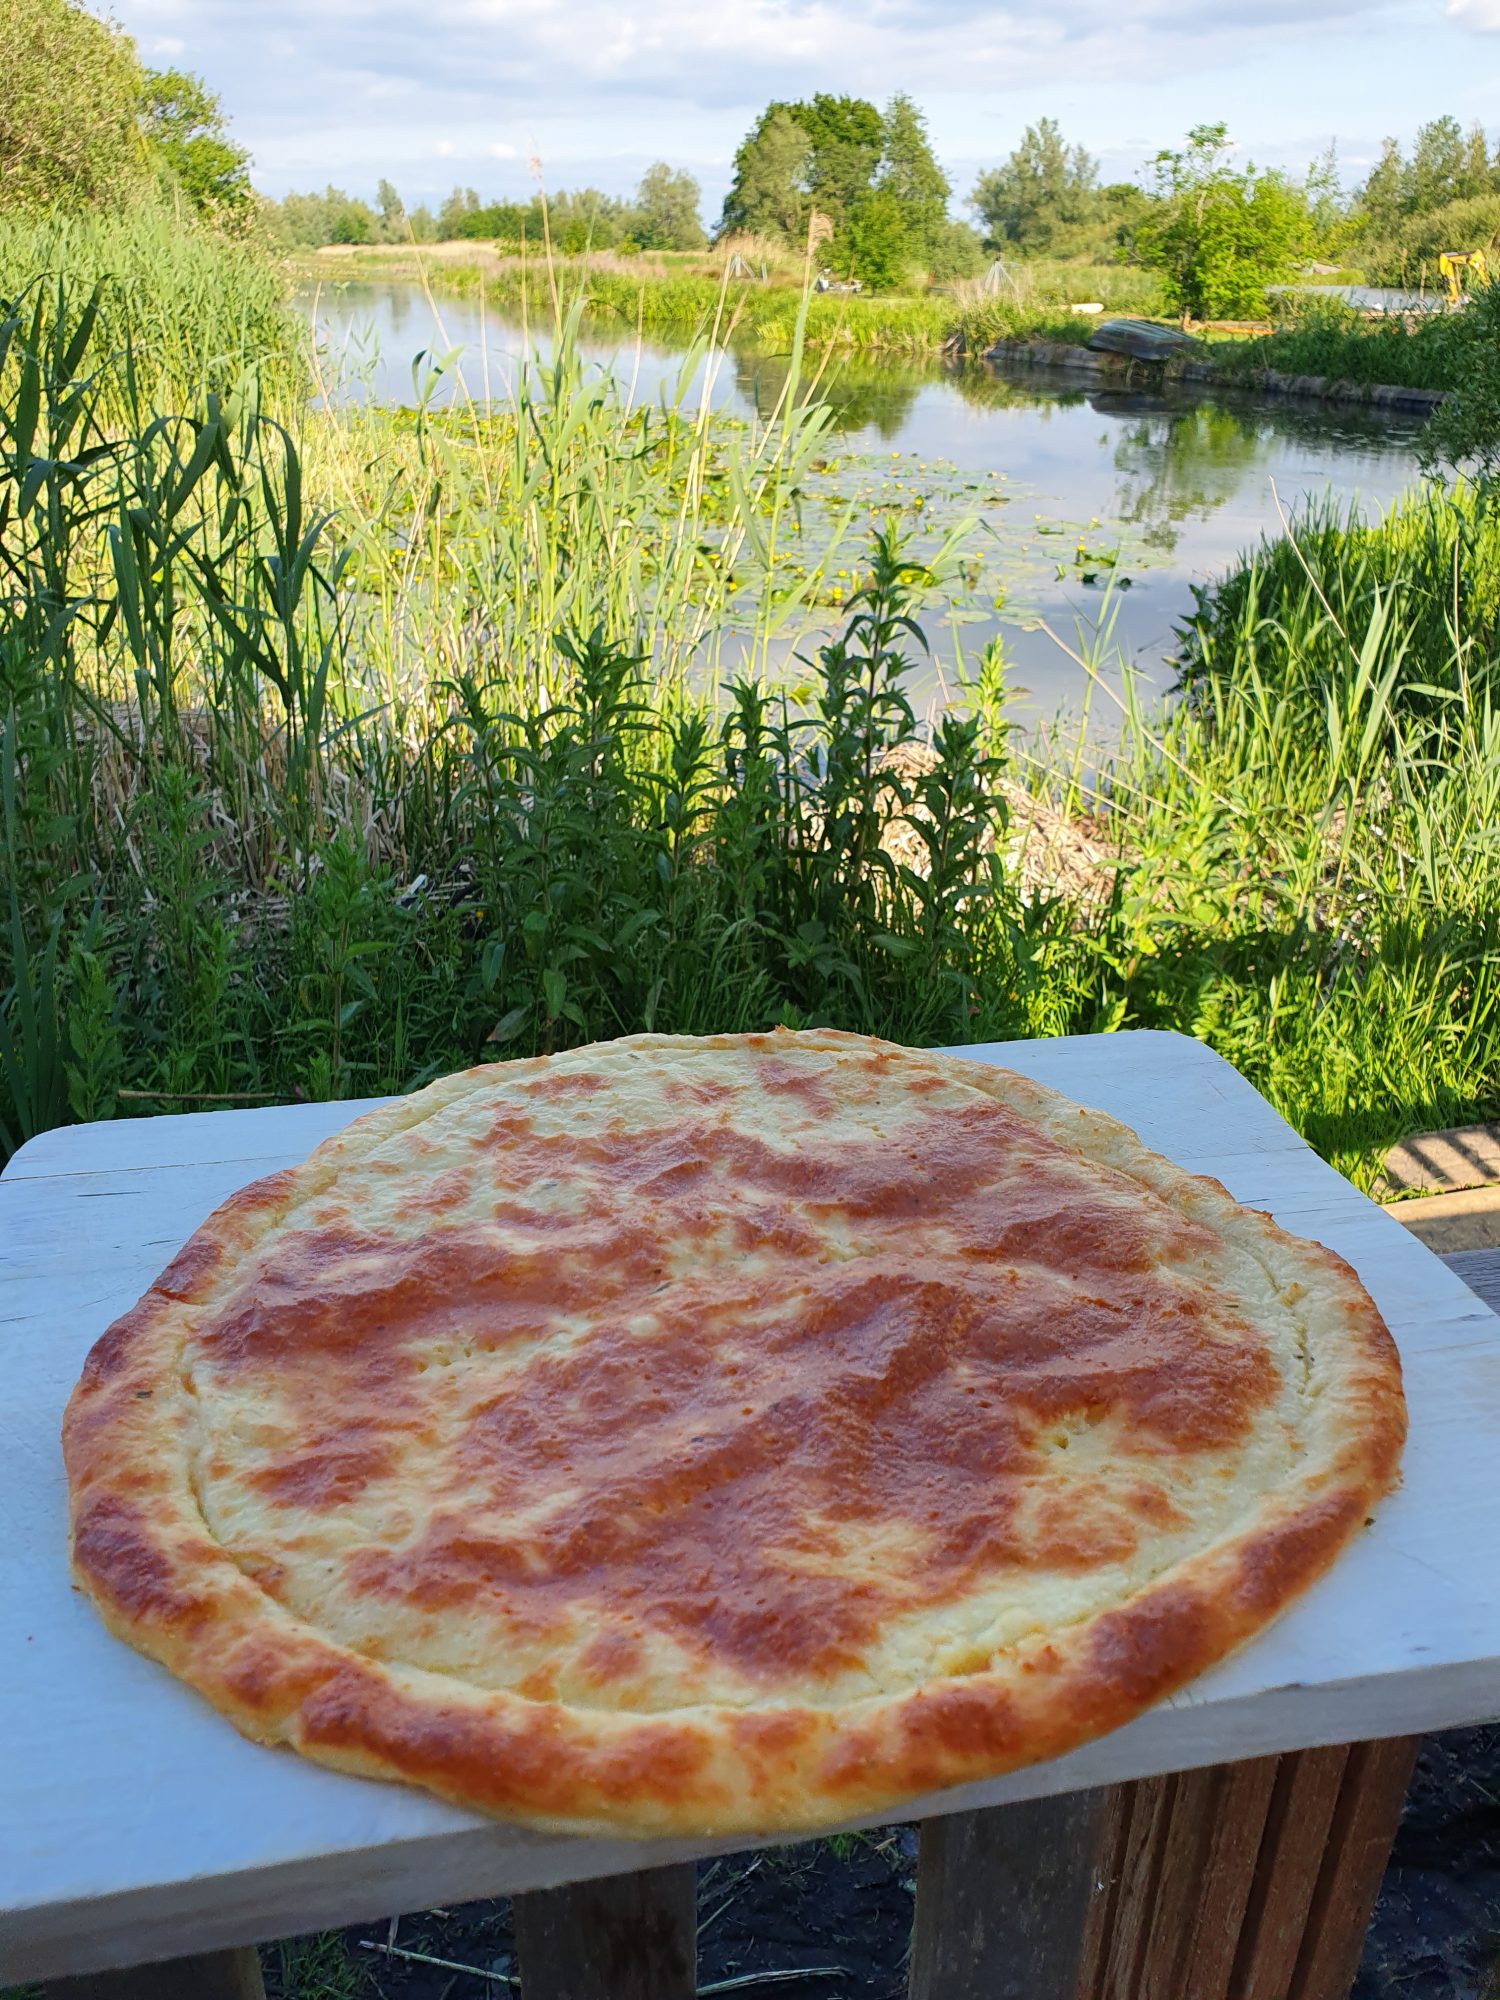 Keto Pizza | Triple Cheese